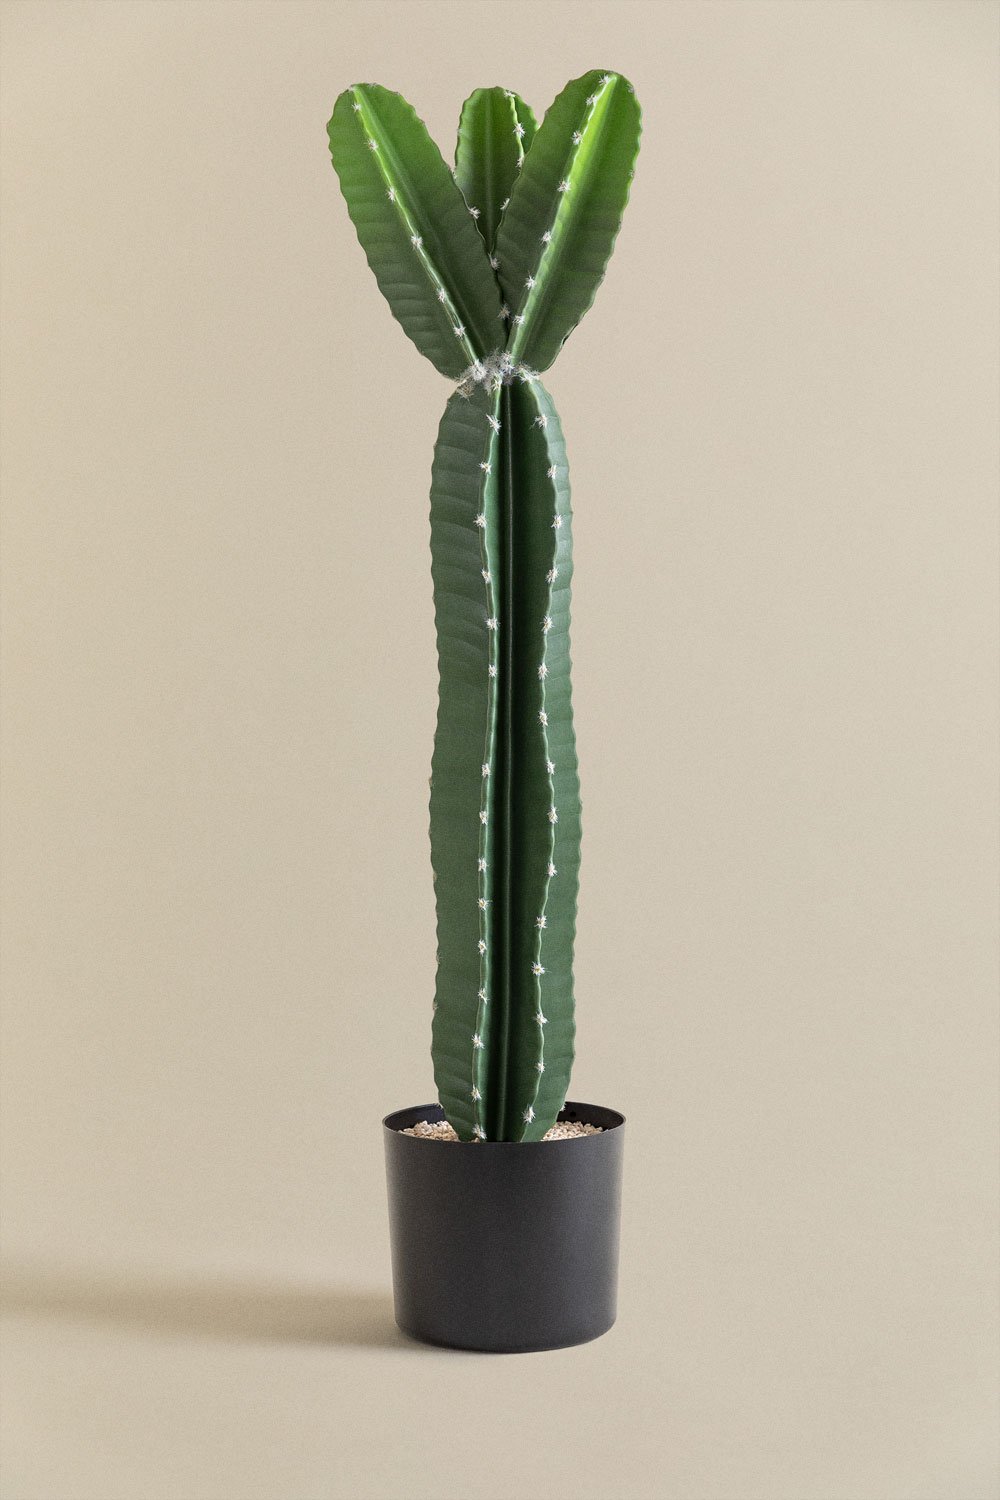 Künstlicher Kaktus San Pedro DENIZ, grün, 80cm